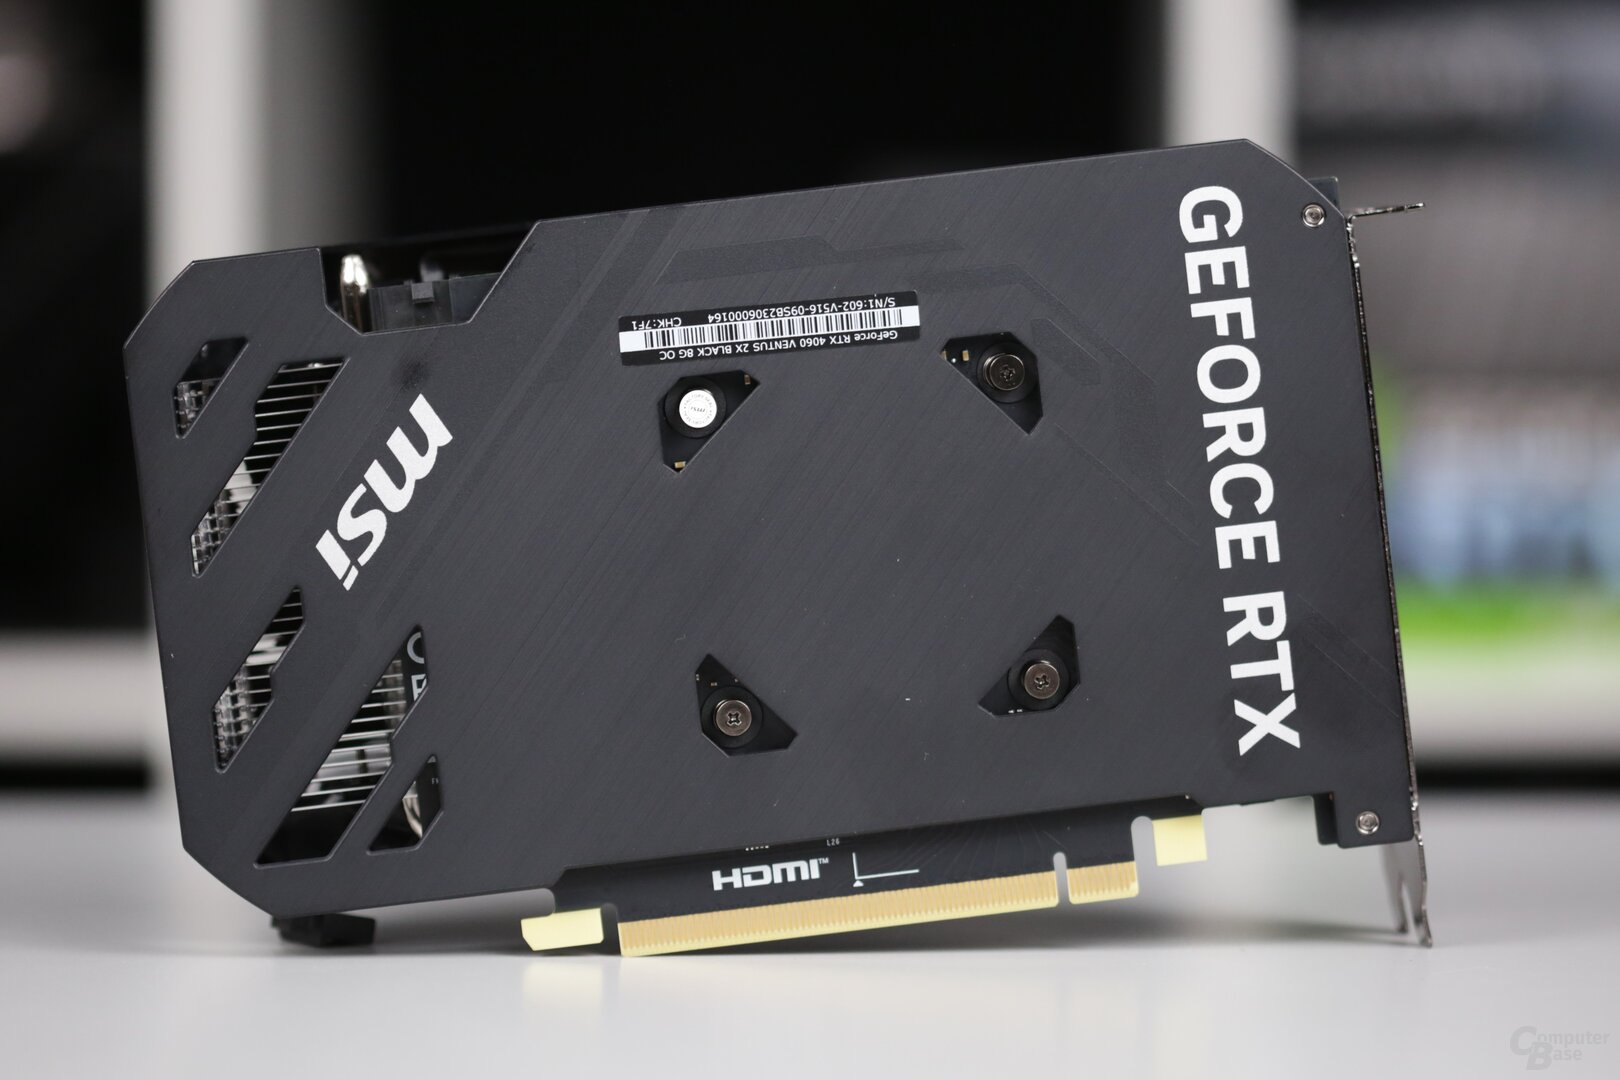 Test GB 8 mit GeForce 4060 - Nvidia RTX ComputerBase im